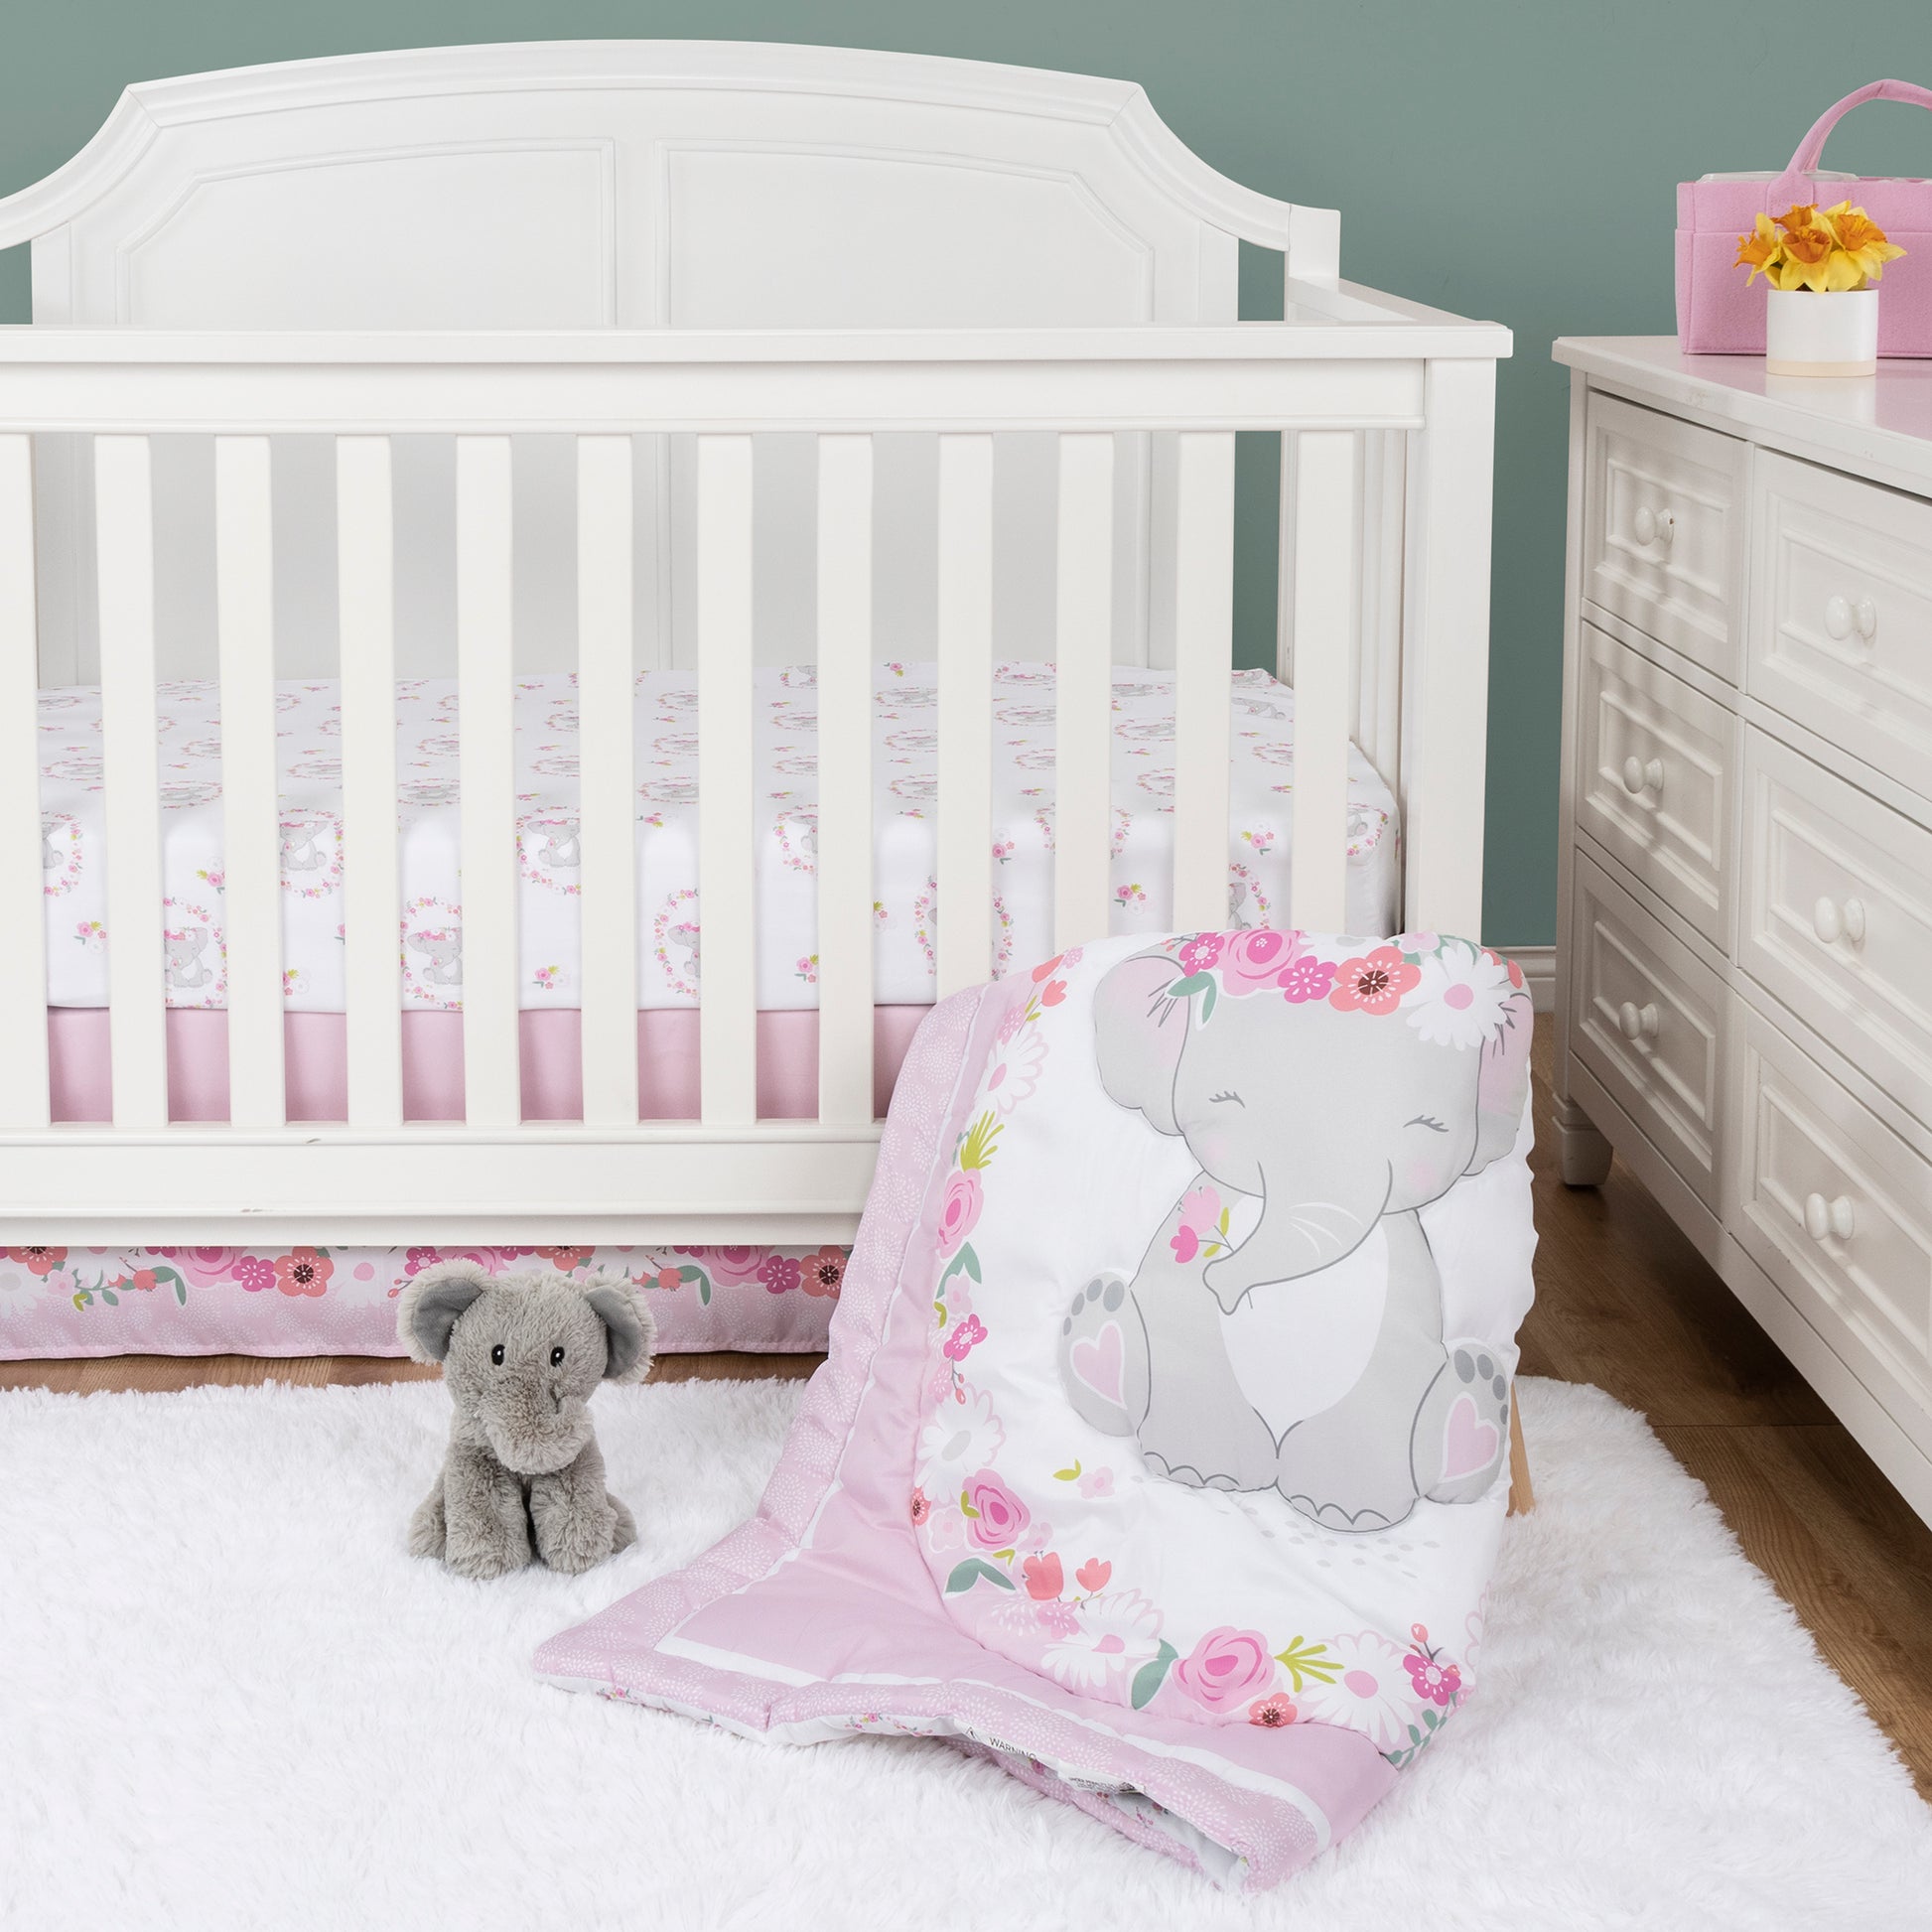  Elephant Garden 4 Piece Crib Bedding Set by Sammy & Lou® in stylized nursery. Set includes nursery quilt, fitted crib sheet, crib skirt and elephant plush toy